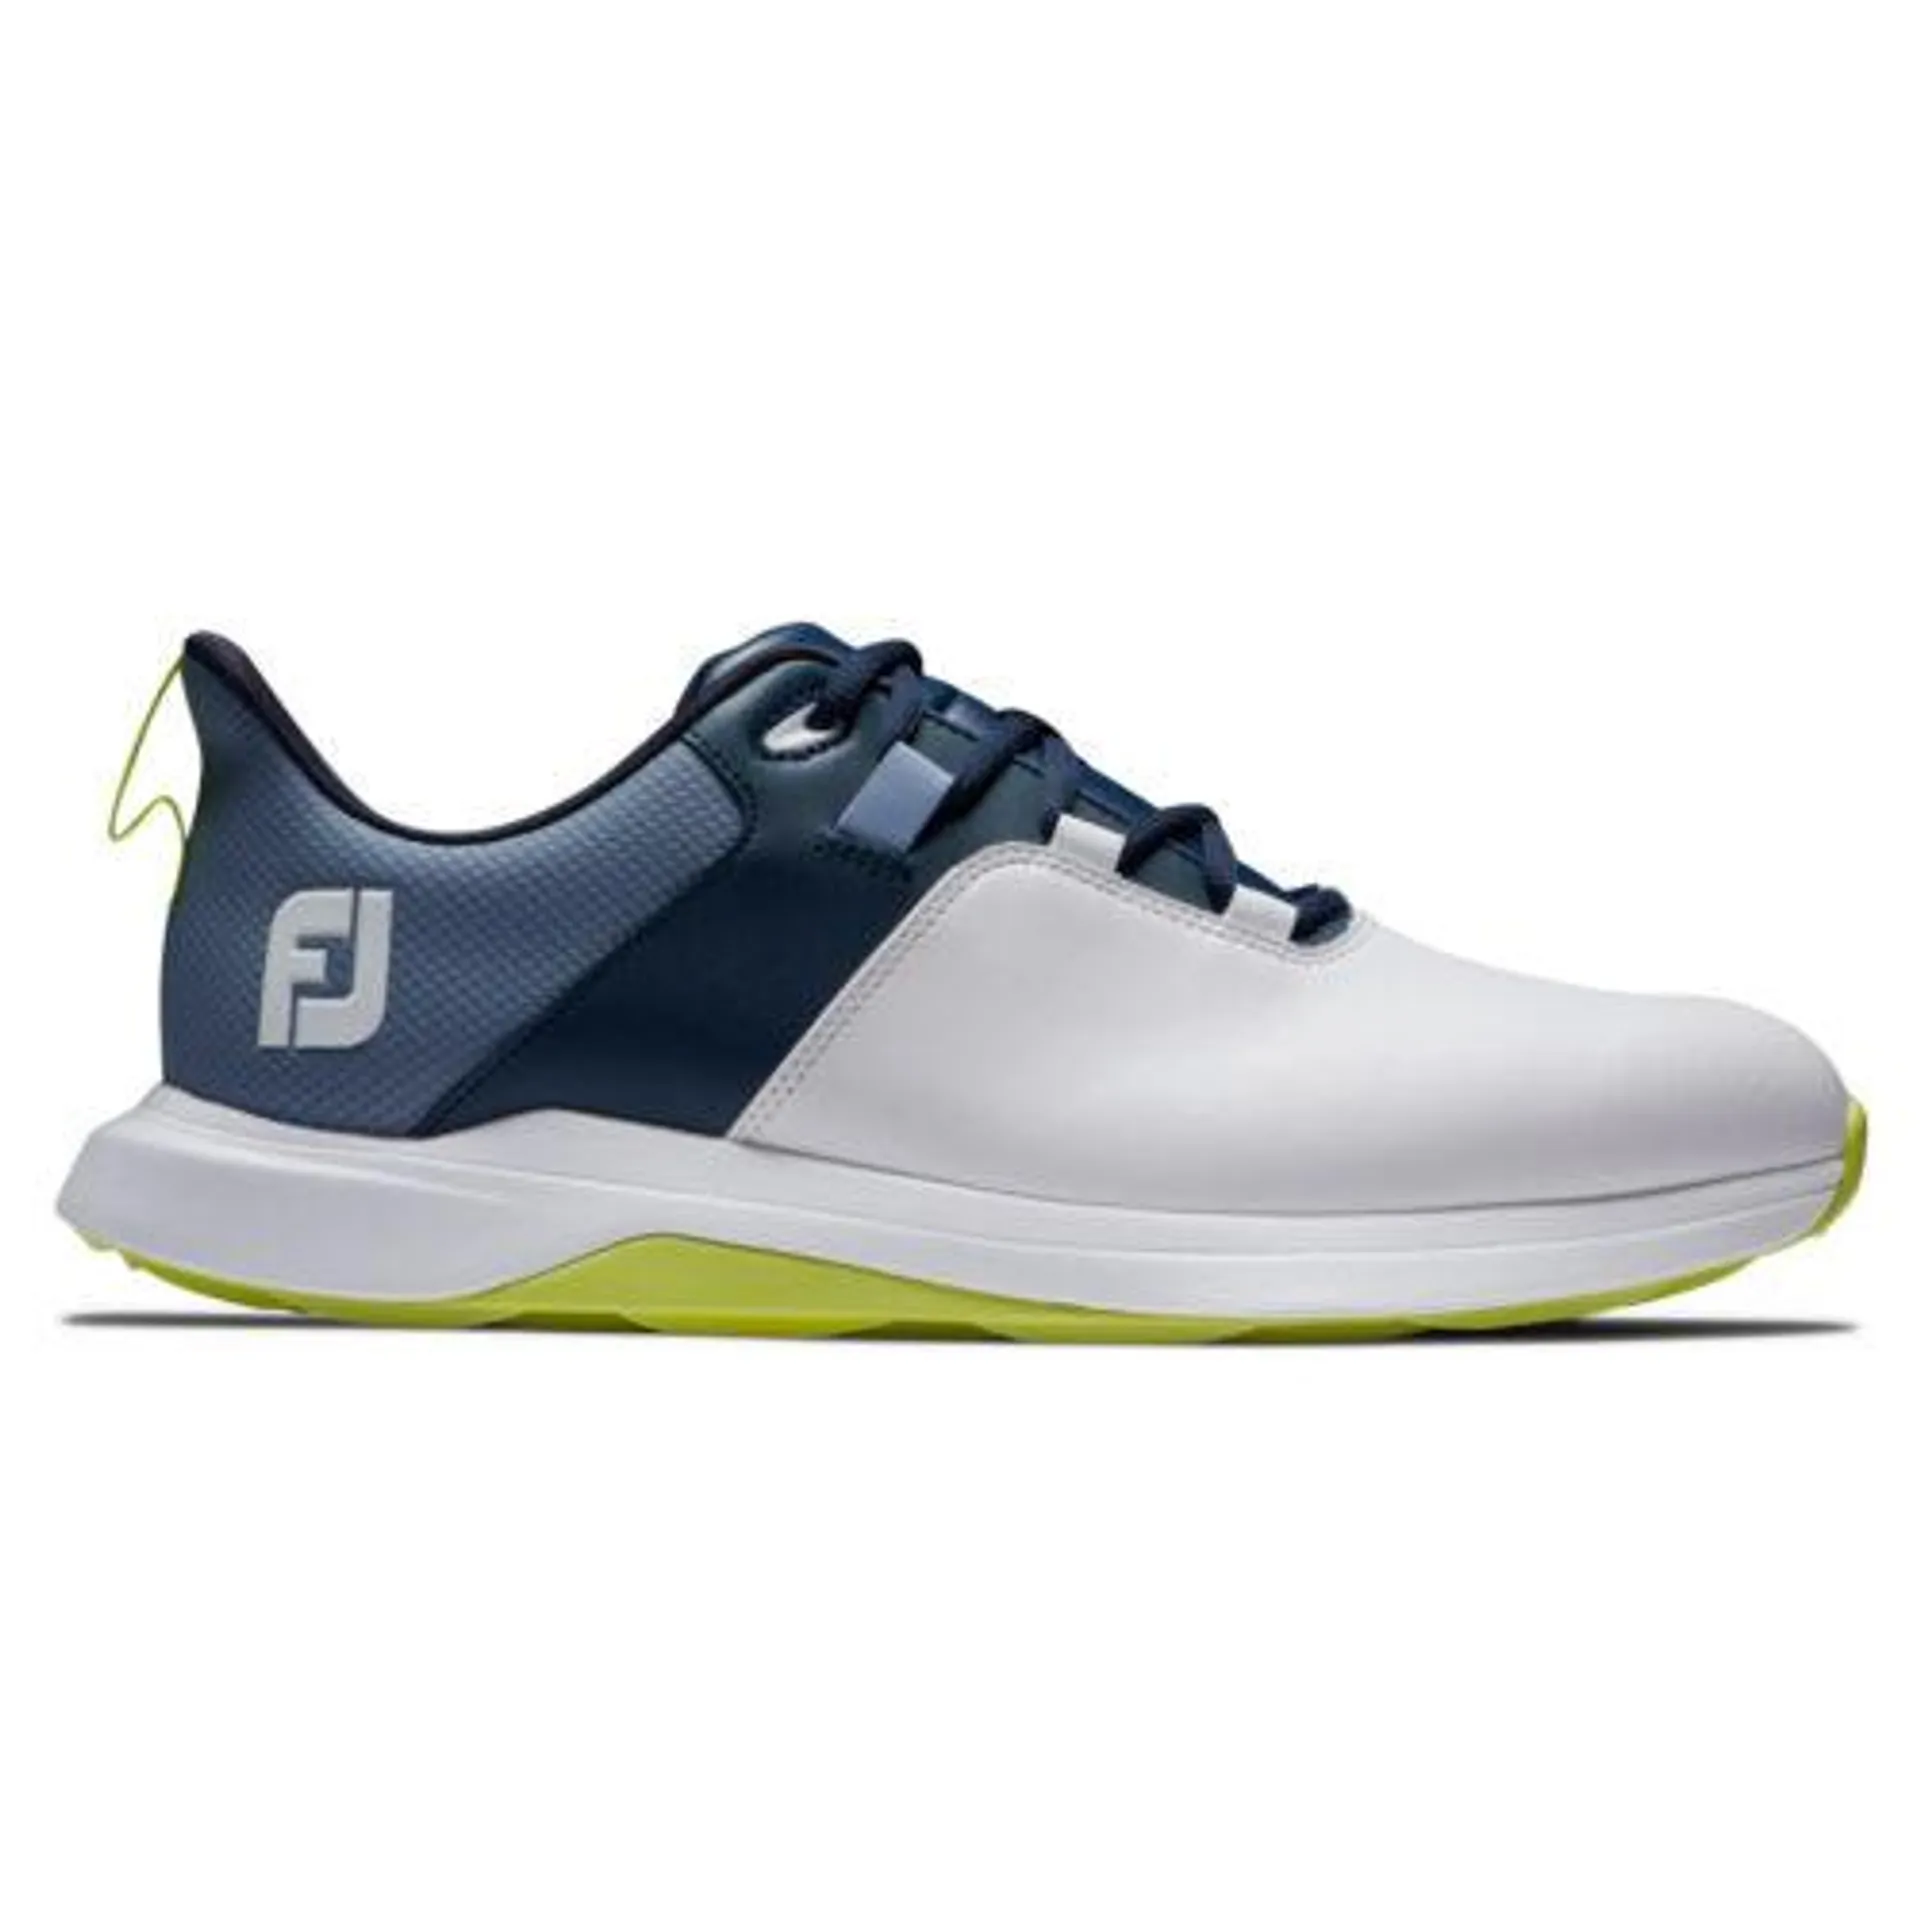 FootJoy Prolite Shoes – White/Navy/Lime 56920